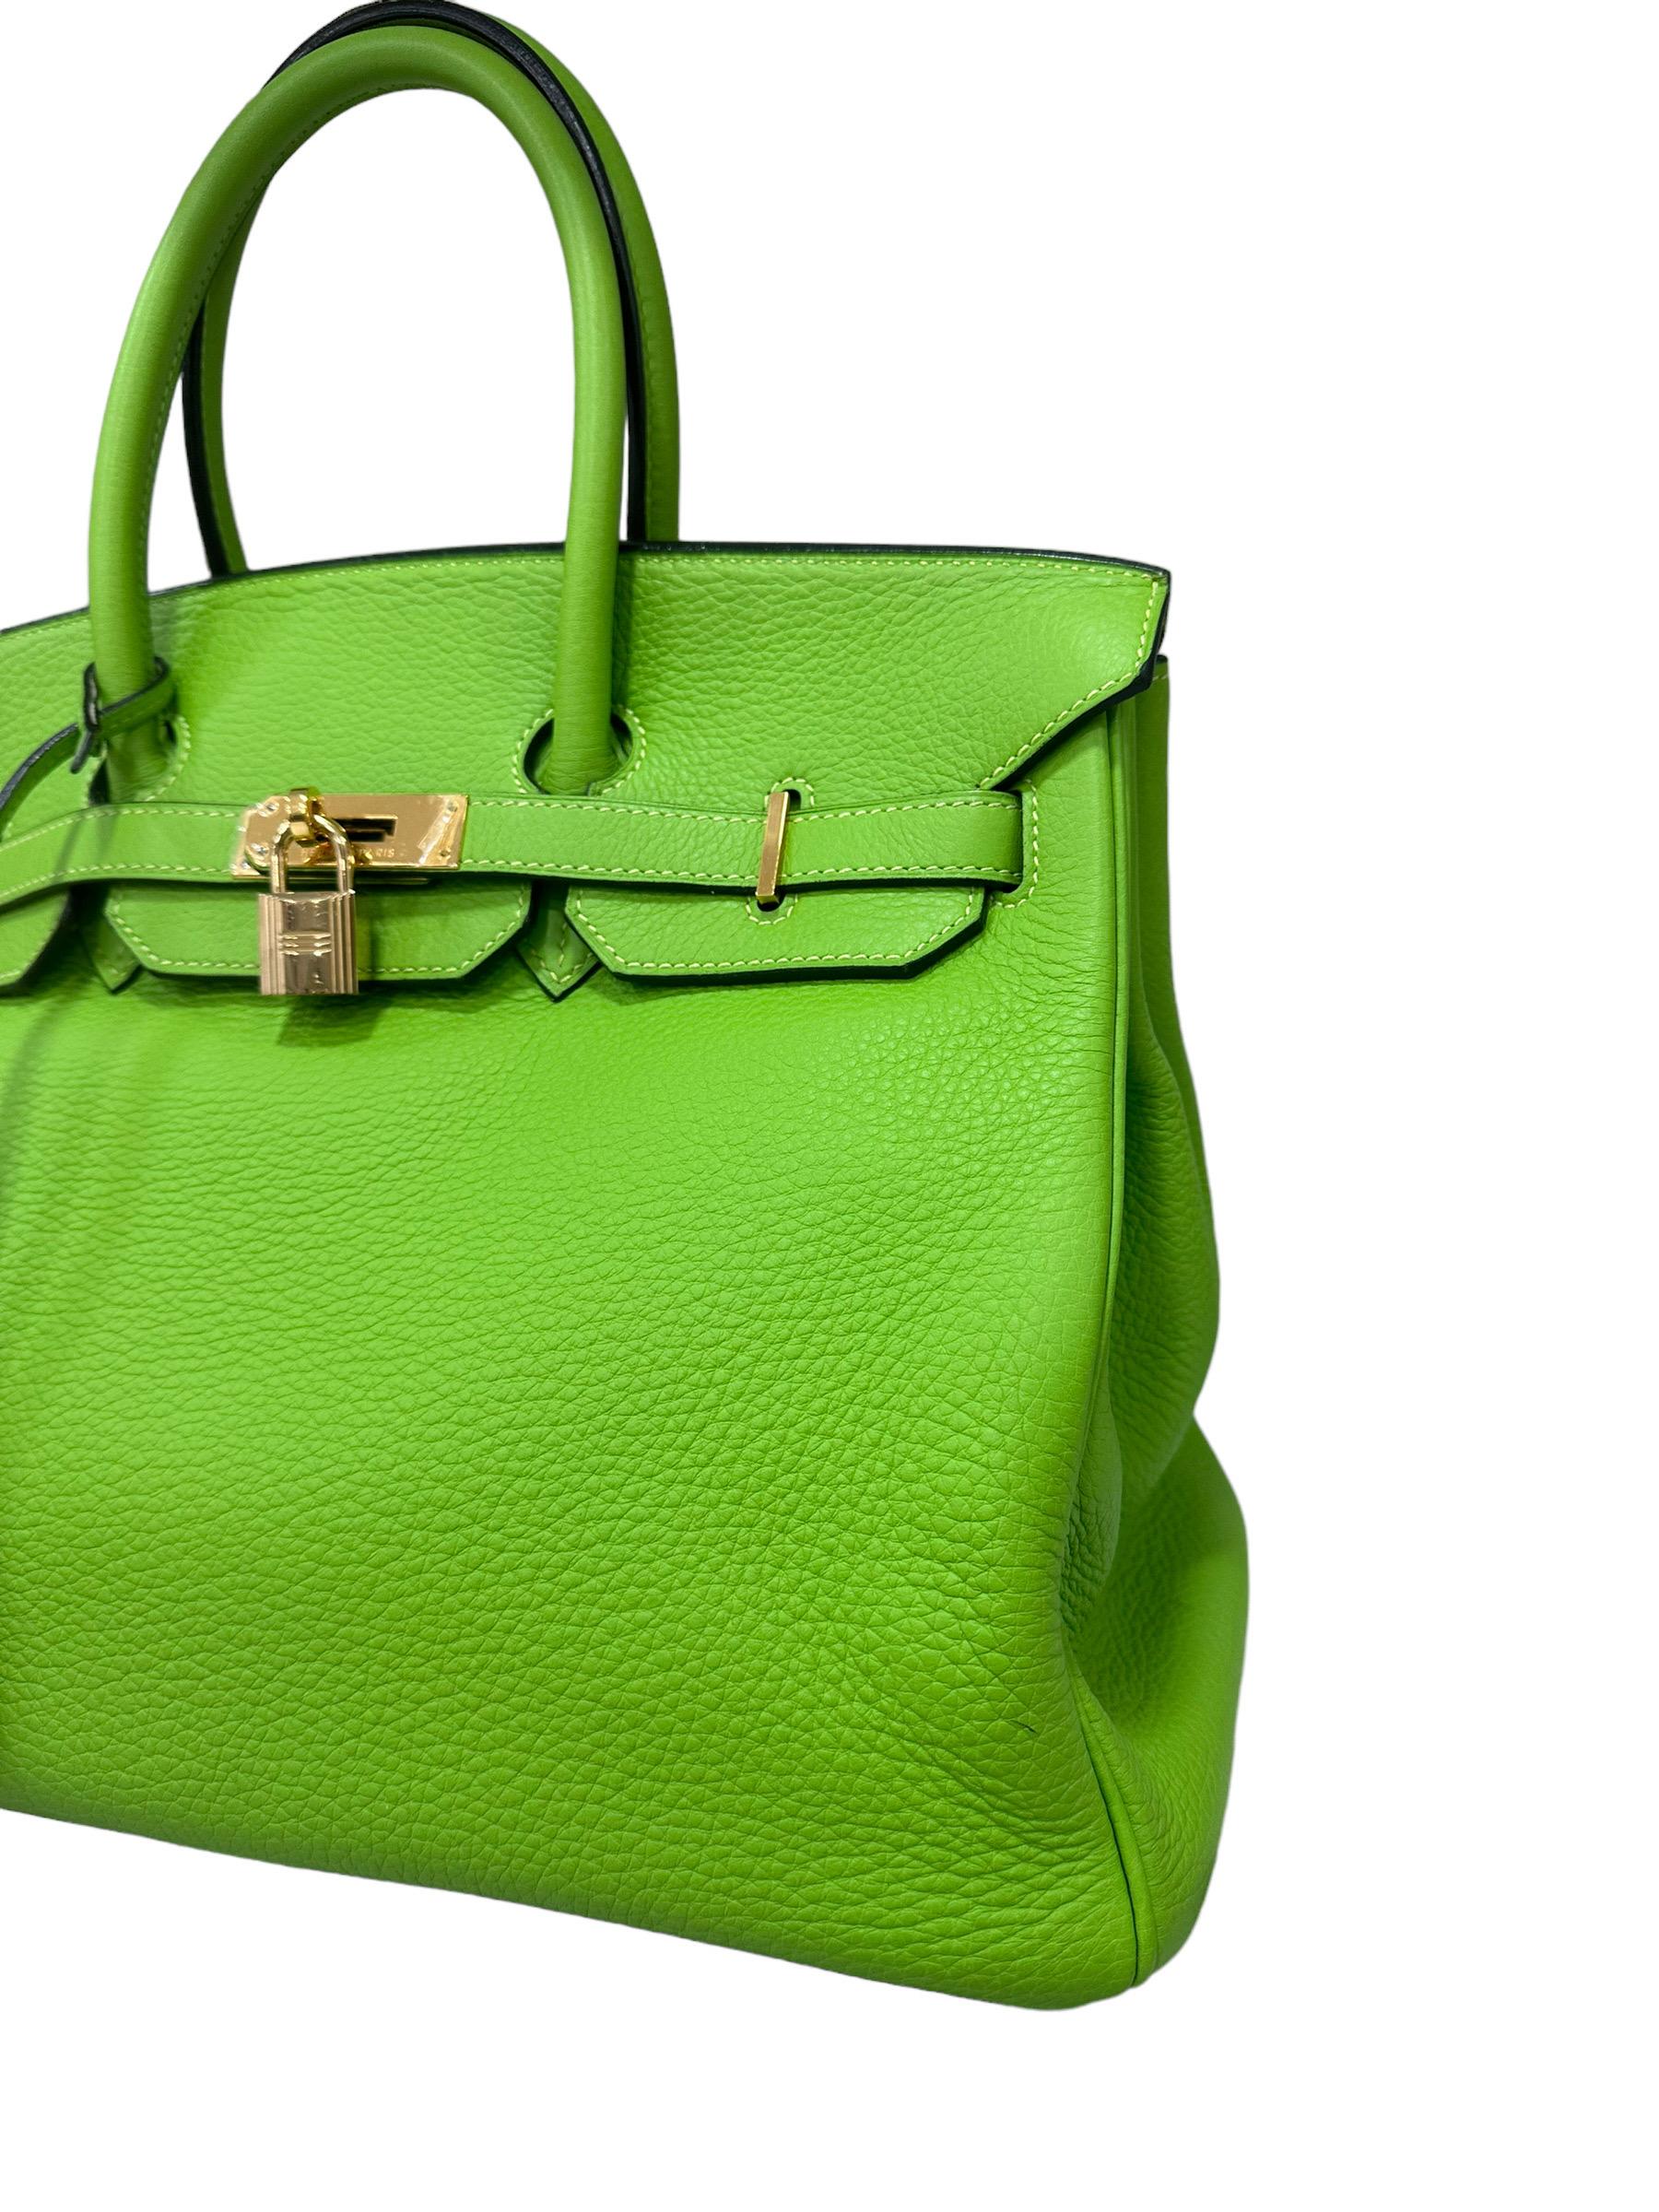 2004 Hermès Birkin 35 Clemence Leather Green Apple Top Handle Bag 14